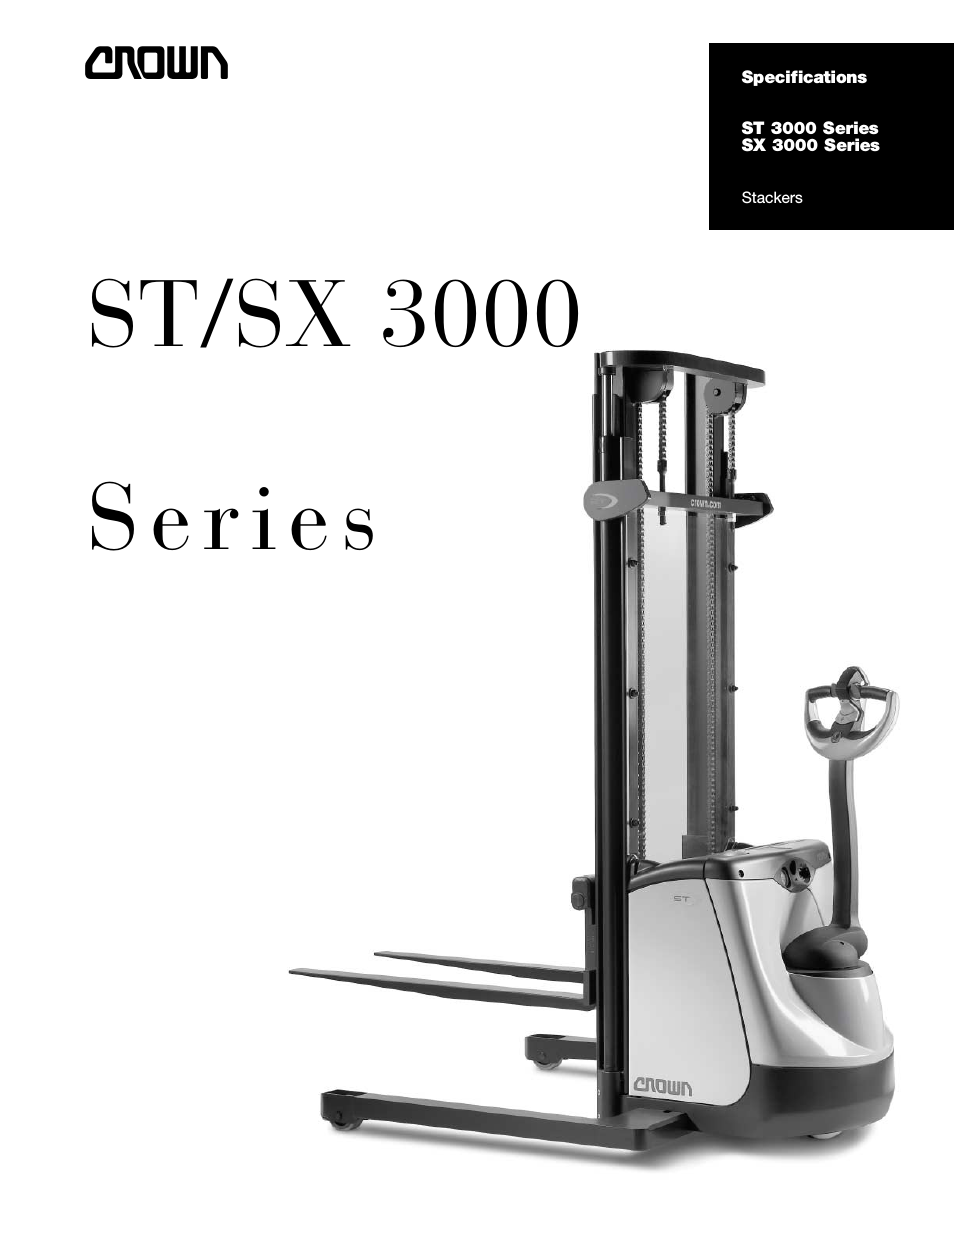 ST 3000 Series